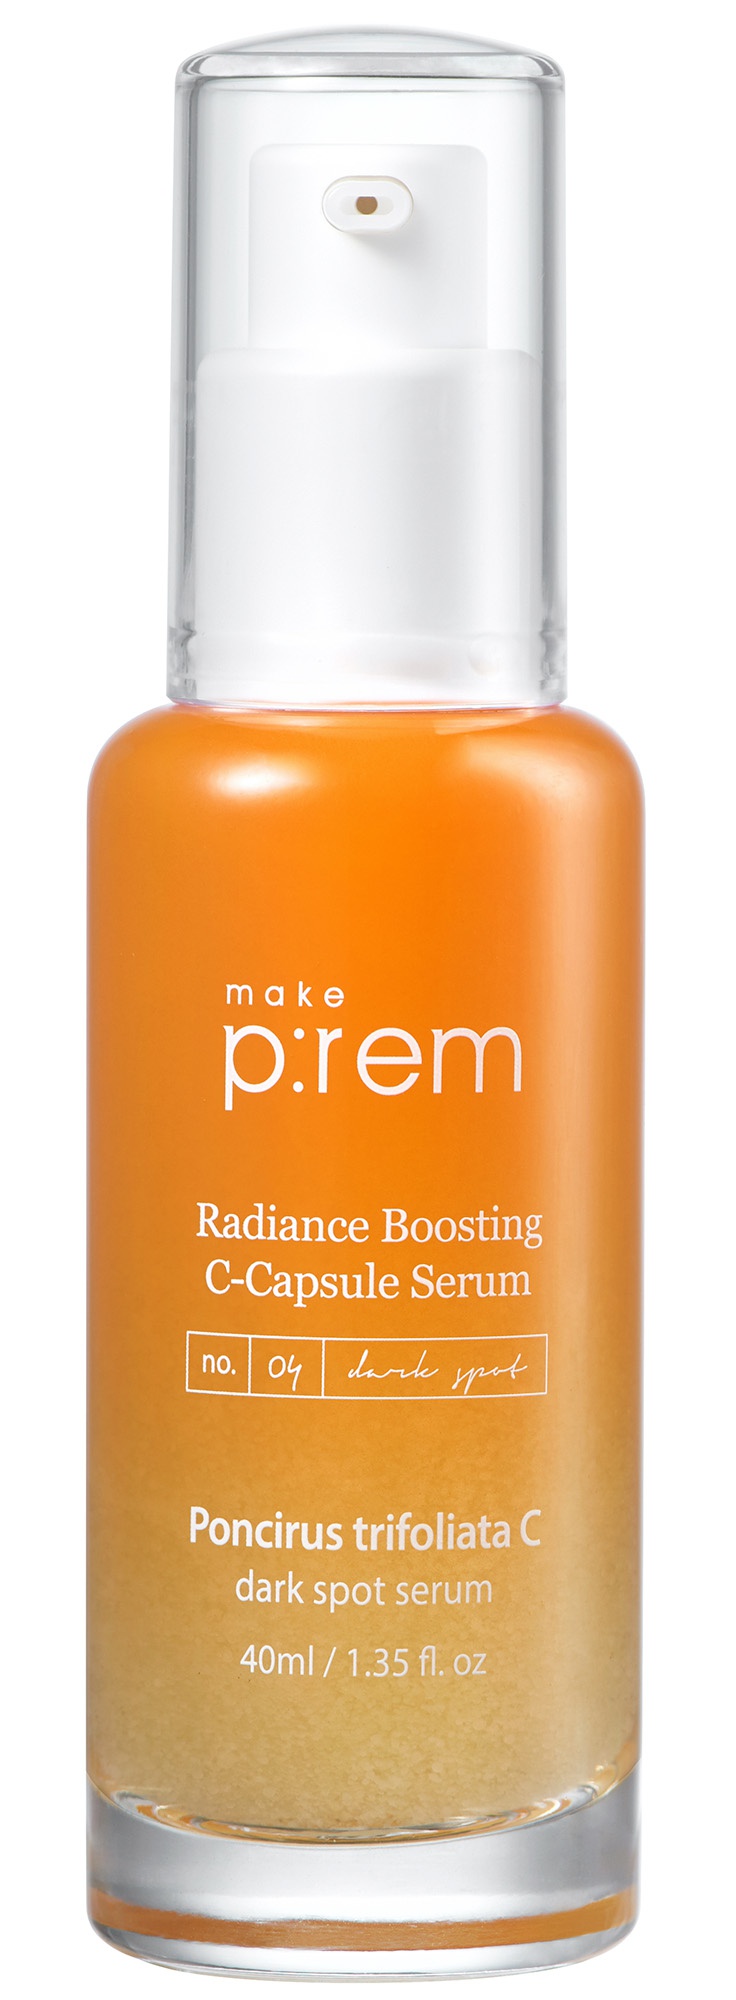 Make P:rem Radiance Boosting C-capsule Serum